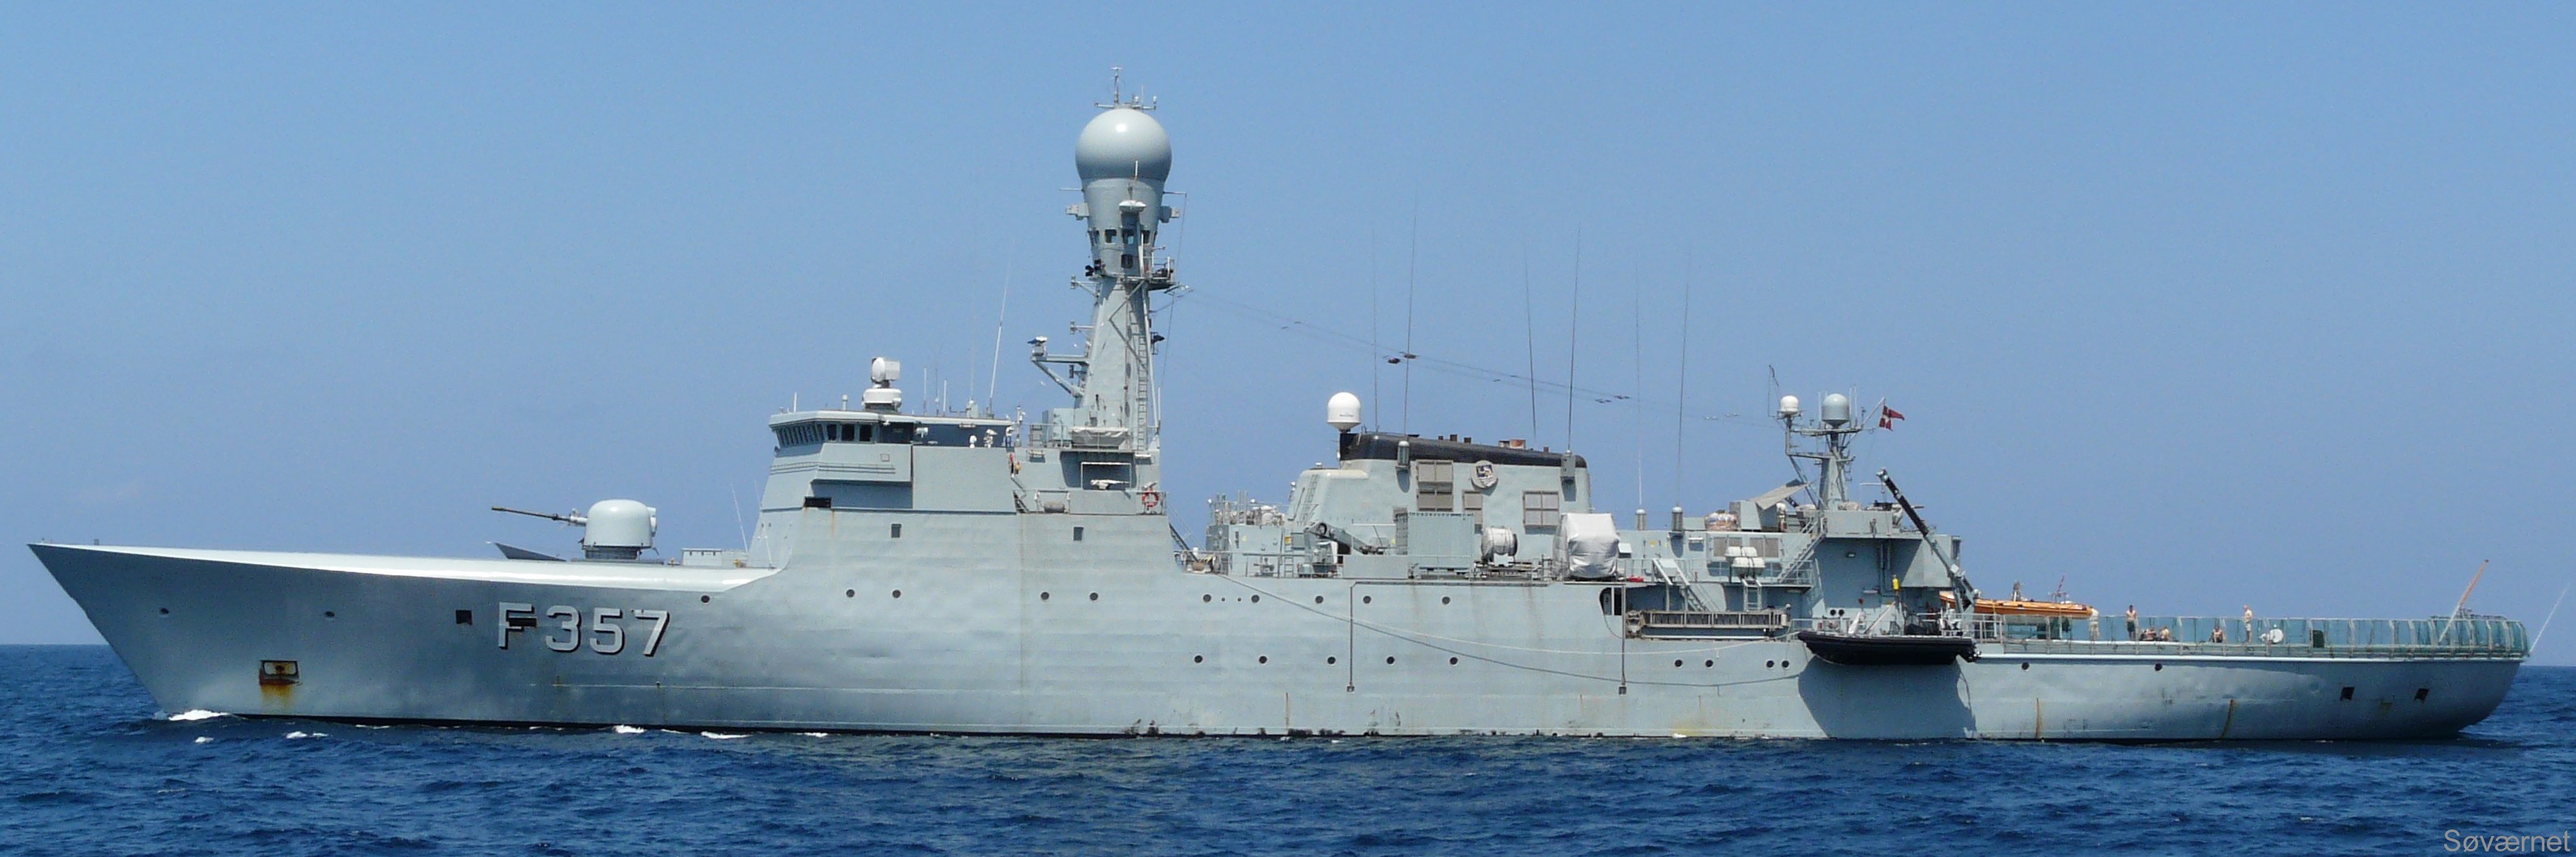 f-357 hdms thetis ocean patrol frigate royal danish navy kongelige danske marine inspektionsskibet 25